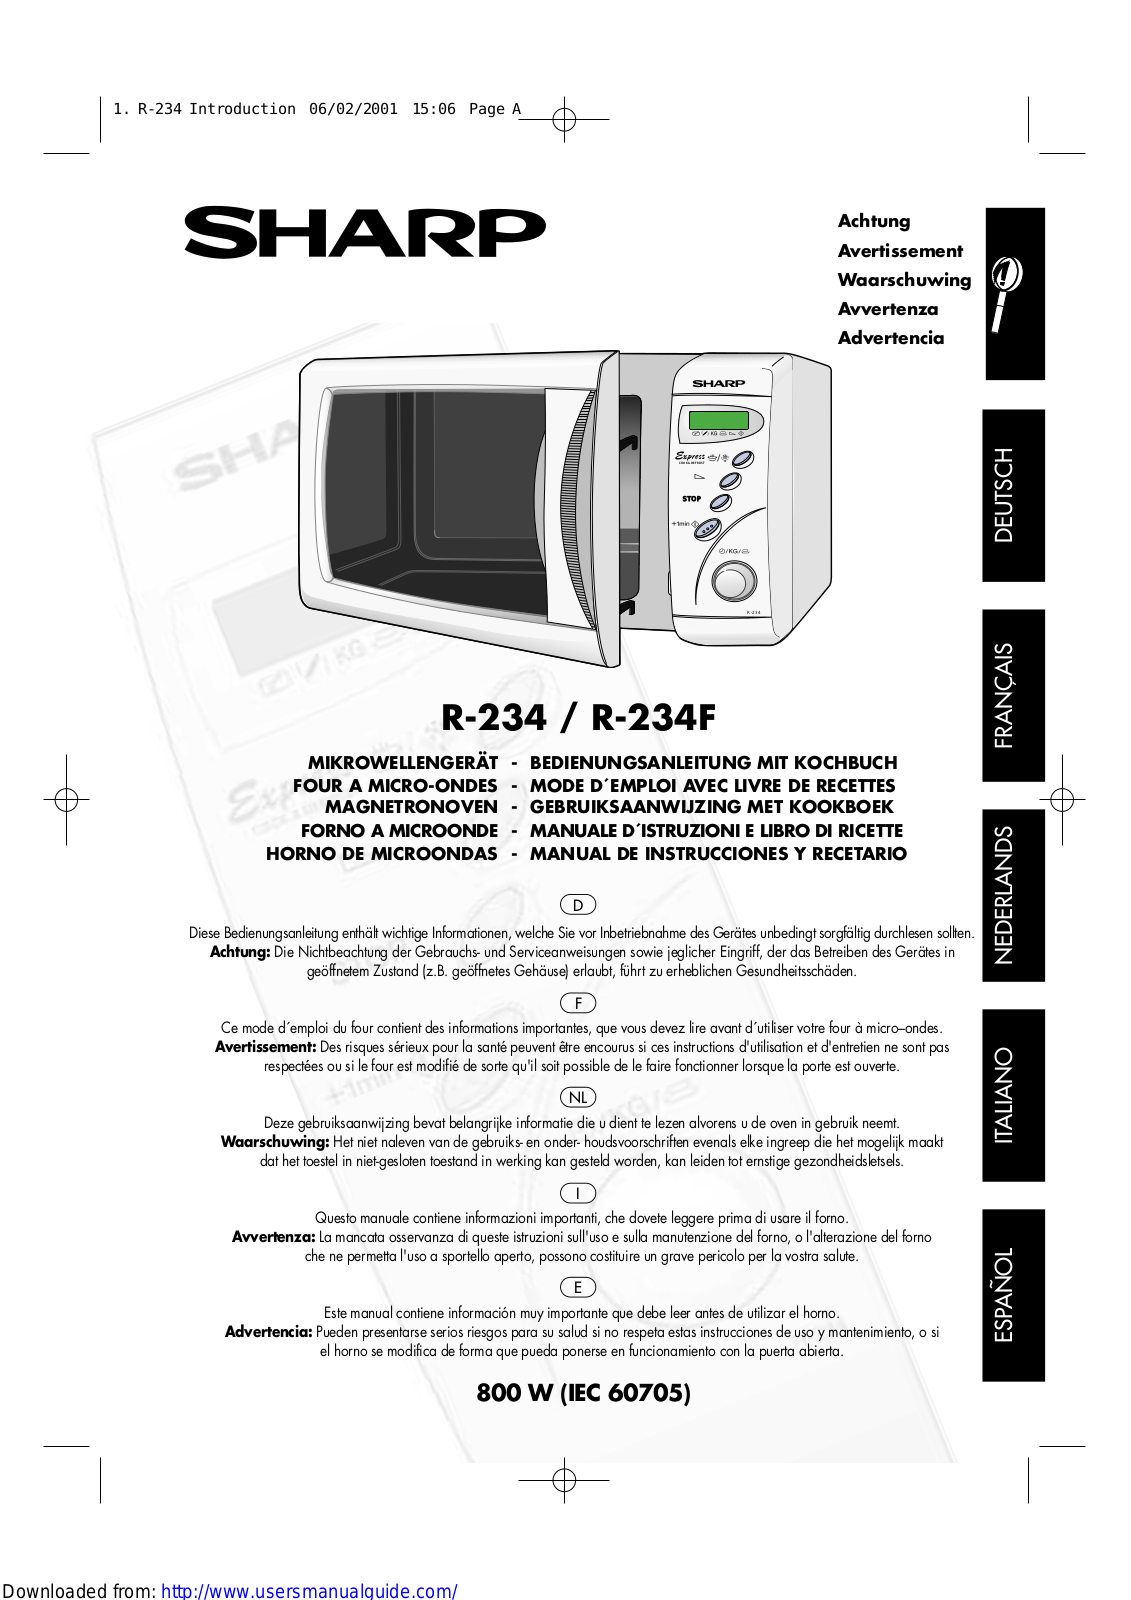 SHARP R-234, R-234F User Manual